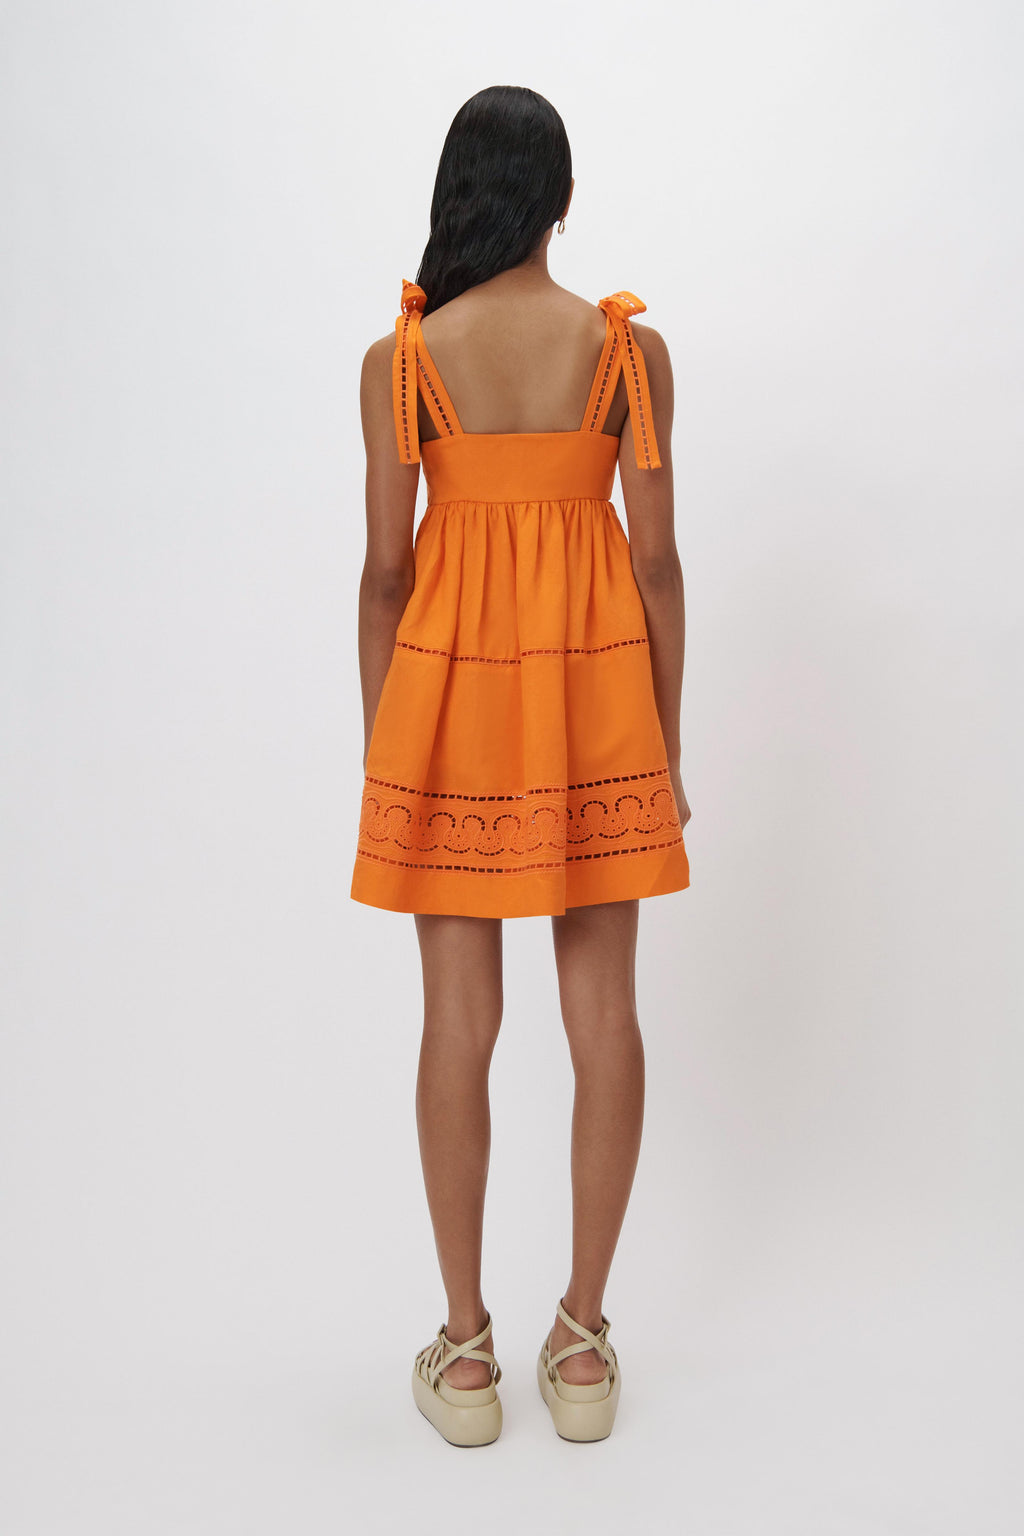 Klementine Dress